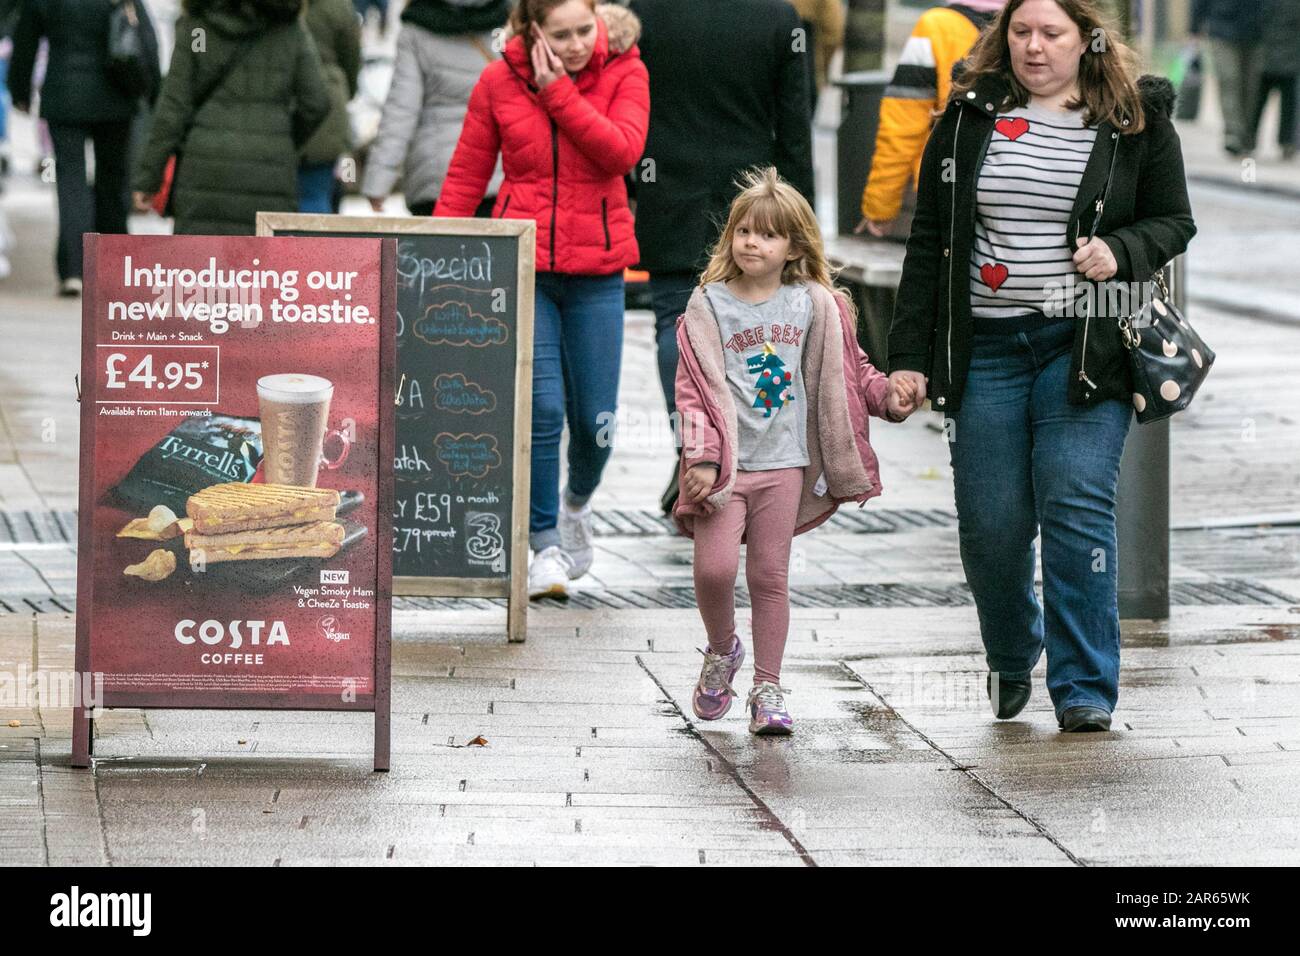 New vegan toastie sign outside Costa coffee in Preston city centre, UK Stock Photo